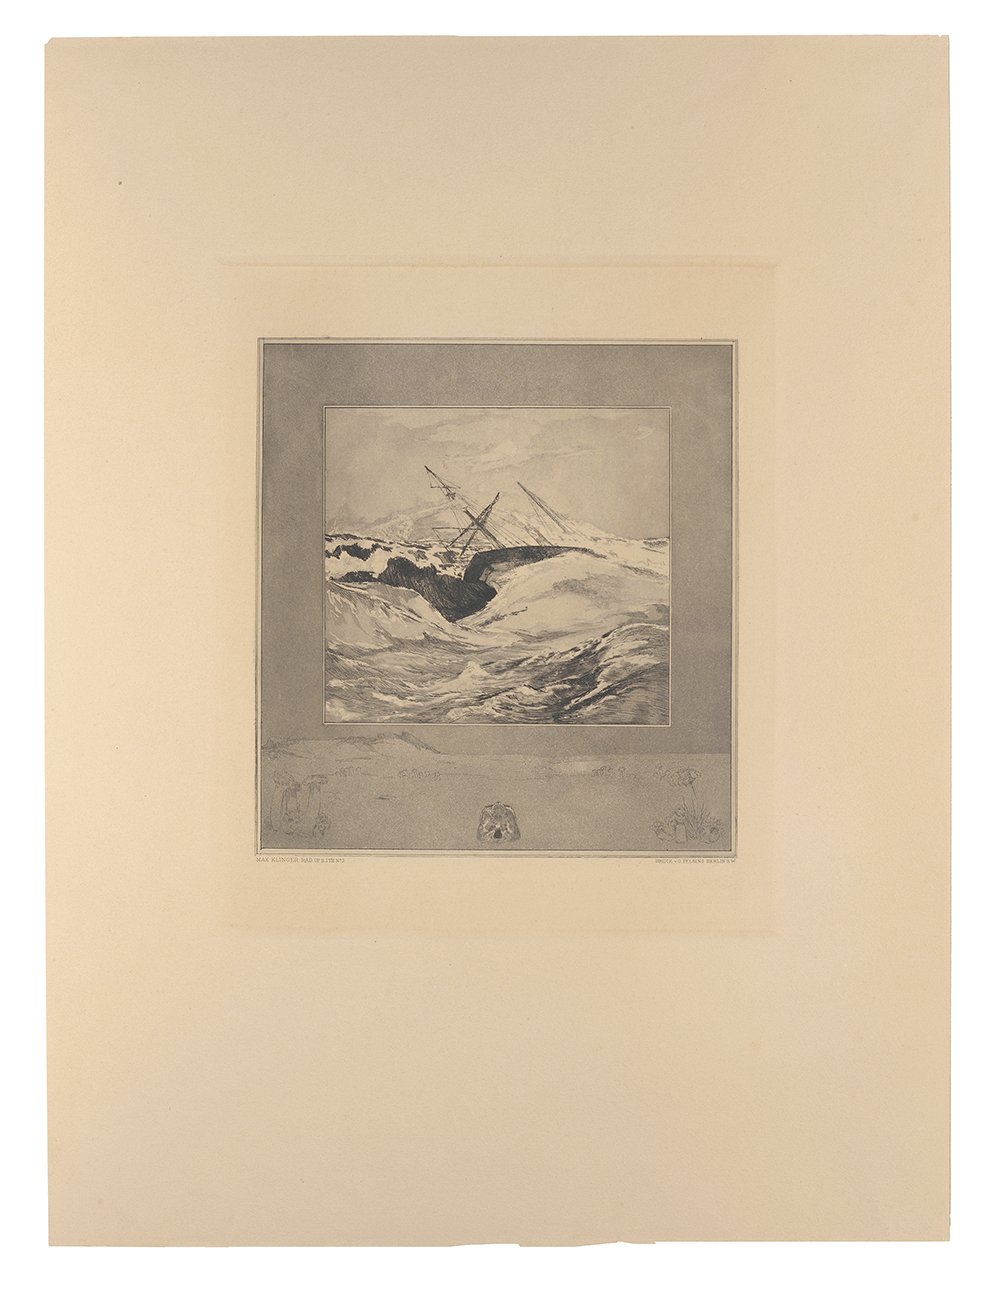 Vom Tode. Erster Teil. Blatt 3: Meer (Kunsthalle Bielefeld Public Domain Mark)